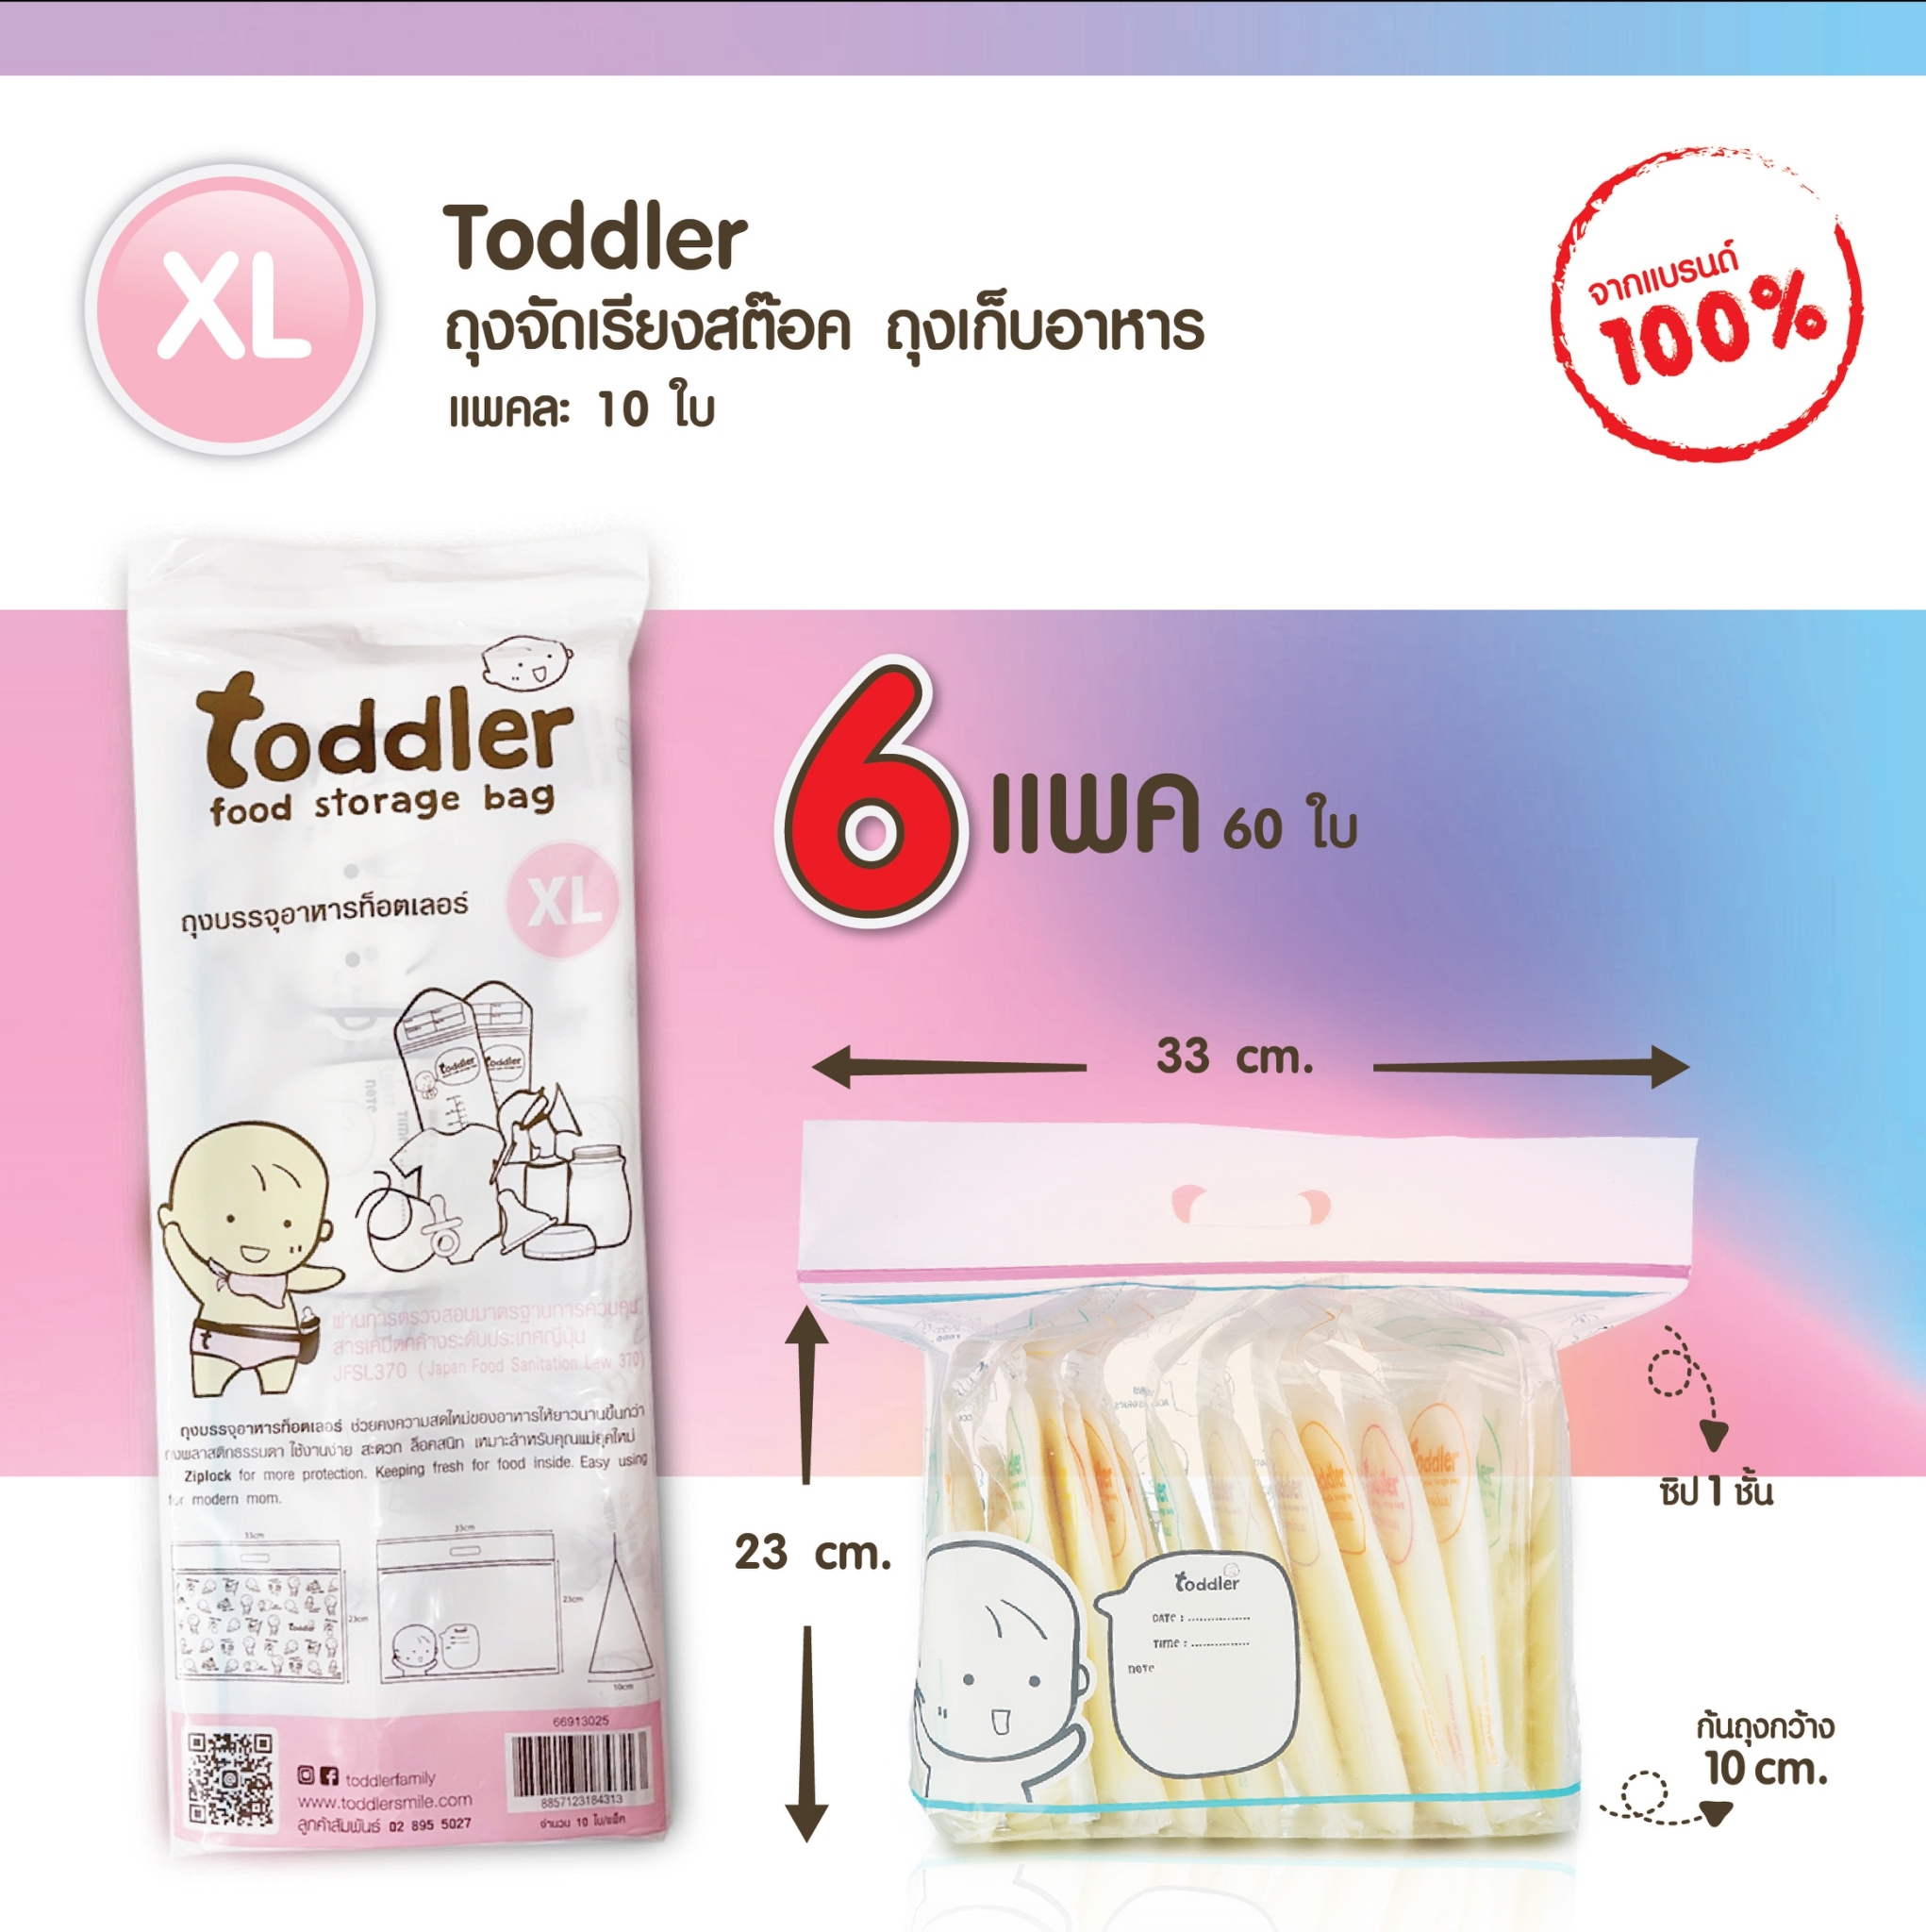 Toddler ถุงซิปล็อค/ถุงจัดเรียงสต๊อคน้ำนมท็อตเลอร์ แพคละ10 ใบ มี 60 ใบ/toddler food storage bag (Size XL) 6pack